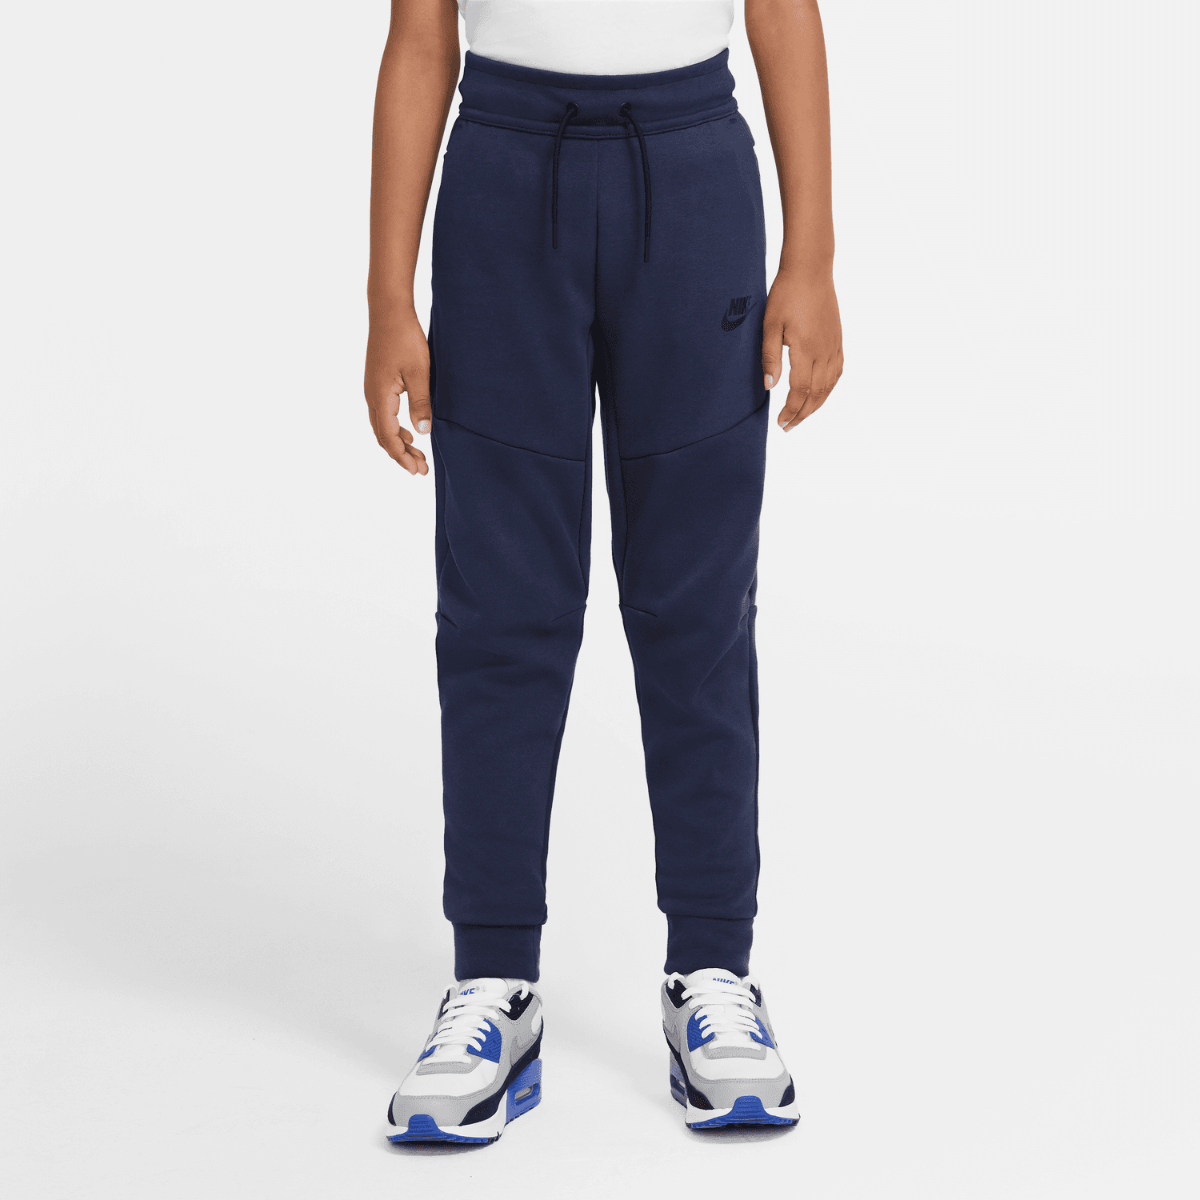 Joggers Nike Tech Fleece Junior - Azul/Negro